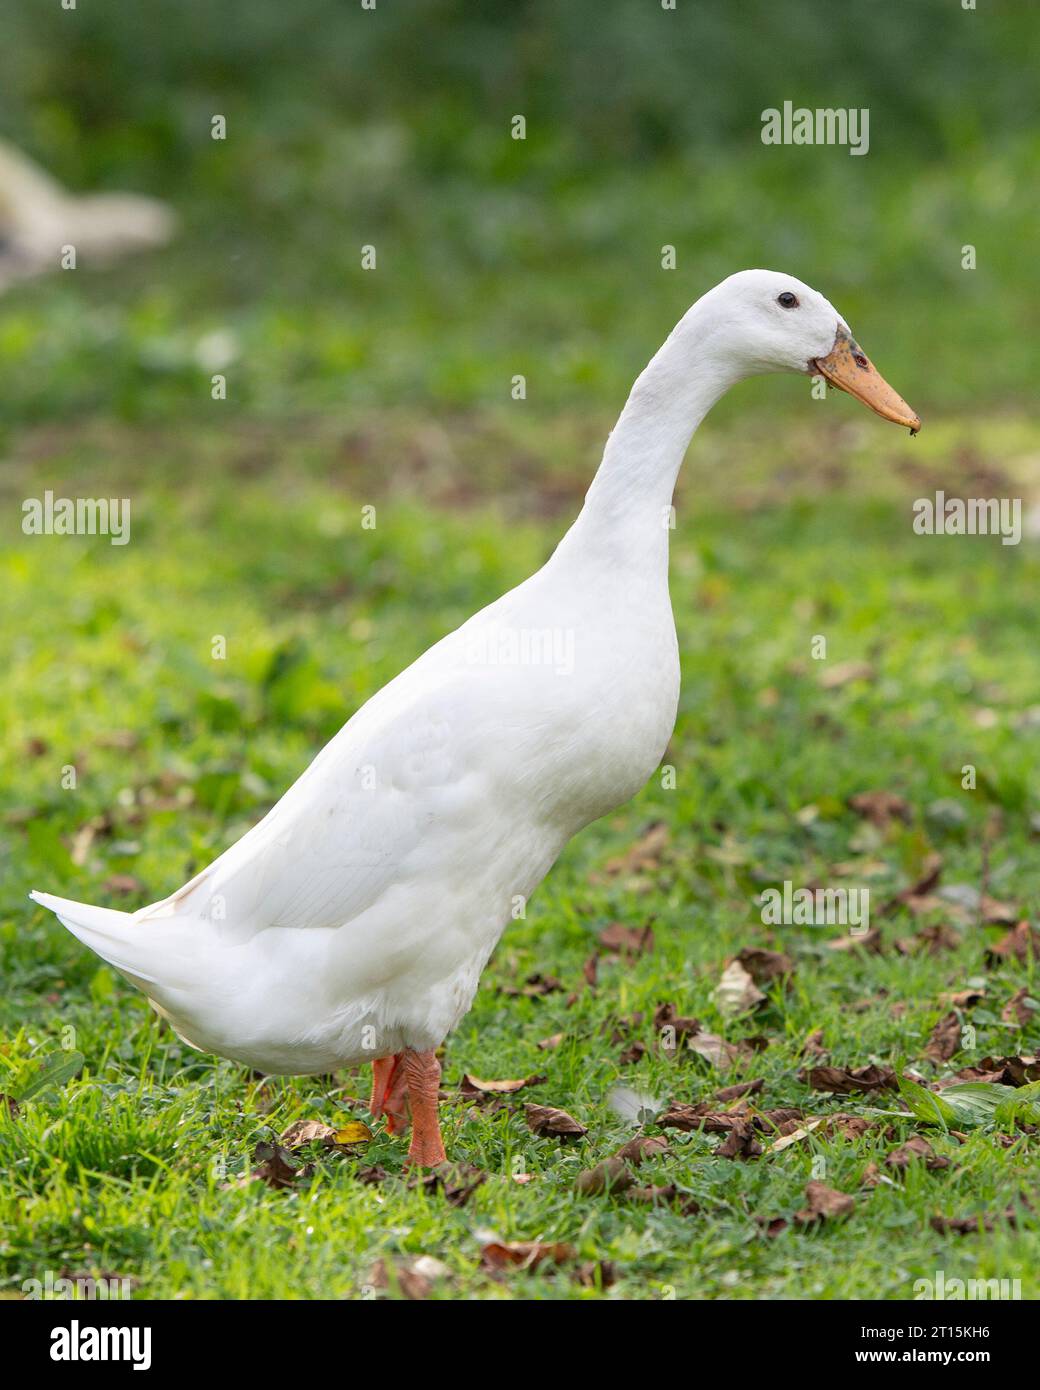 white Indian Runner duck Stock Photo